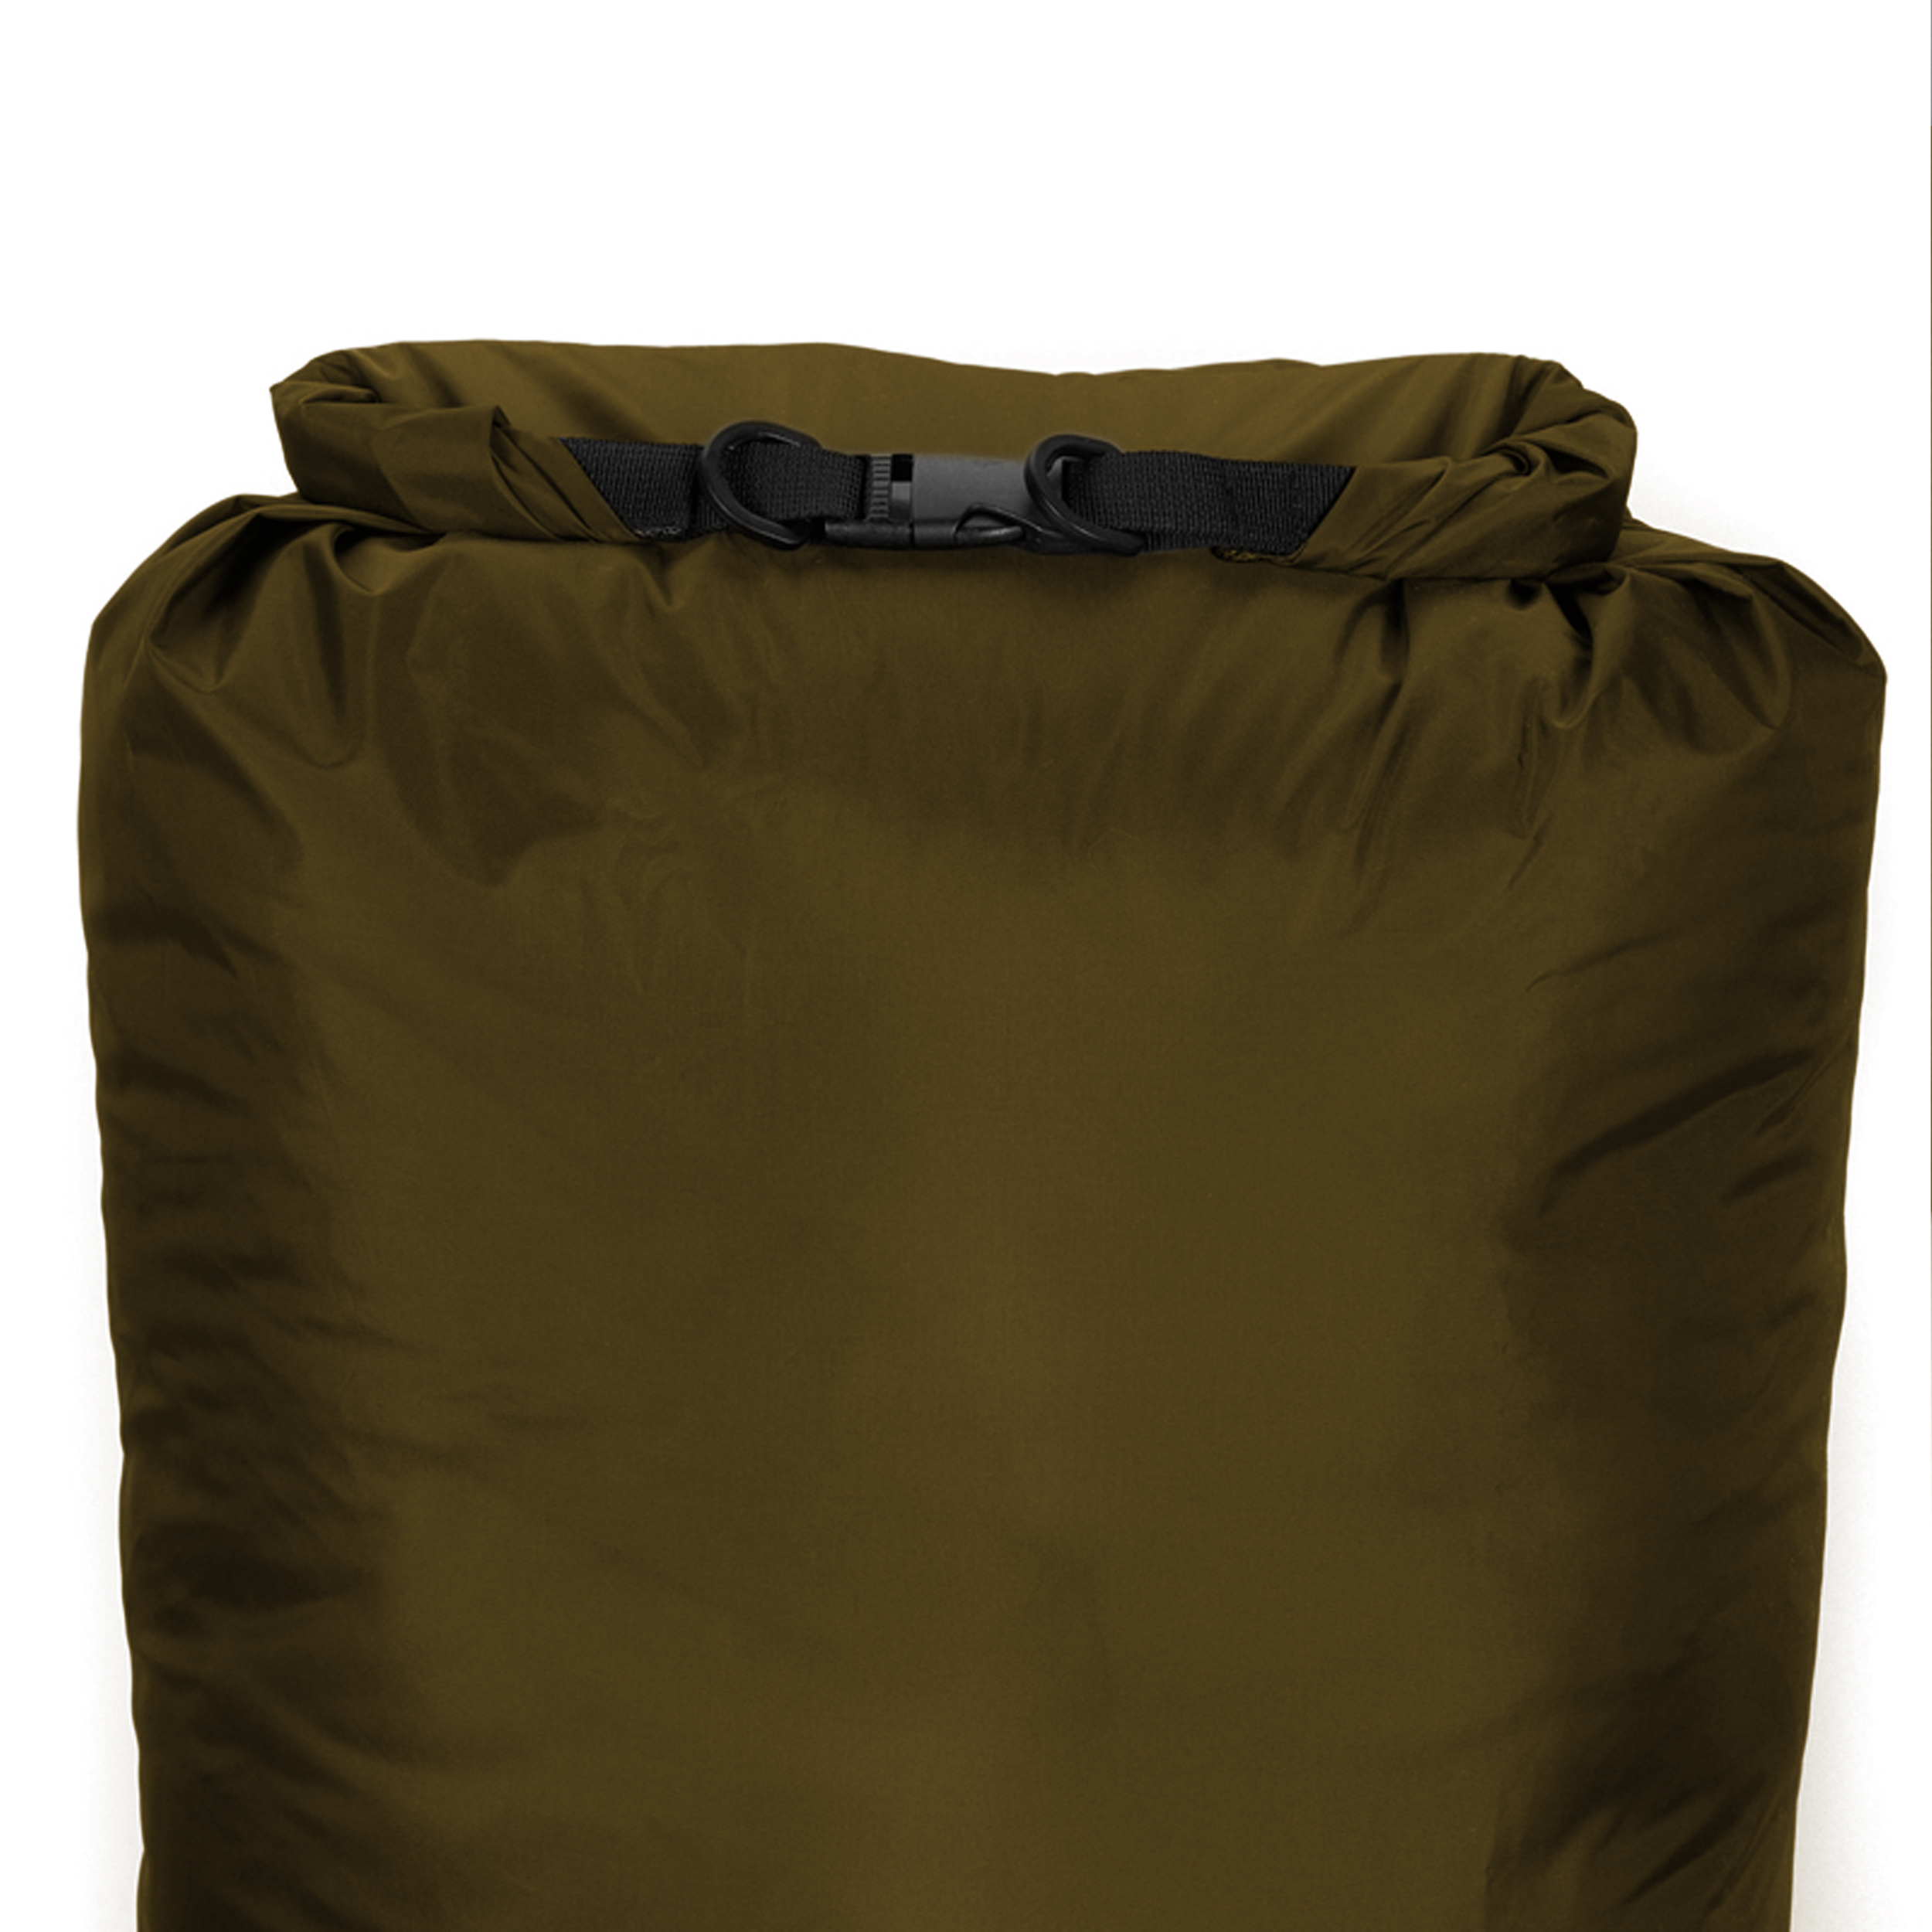 SnugPak Sleeping Bag Compression Sacks - image 4 of 6